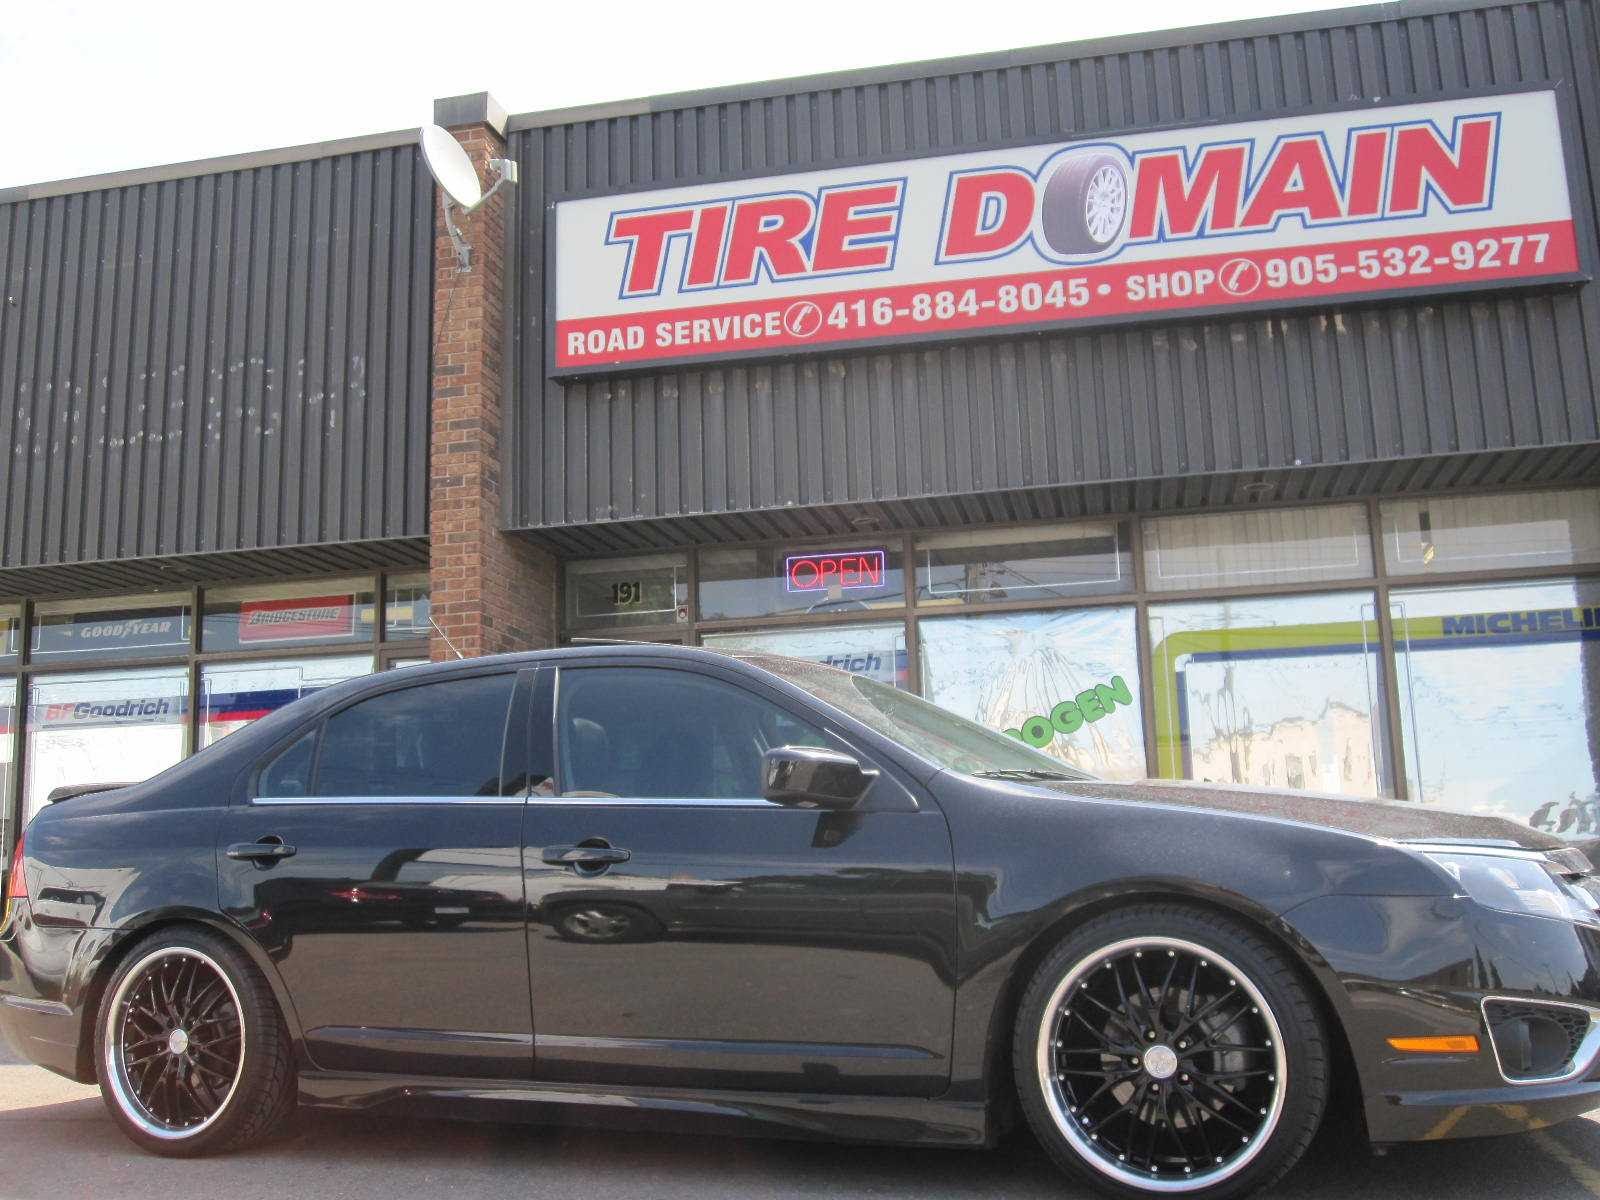 Tire Domain